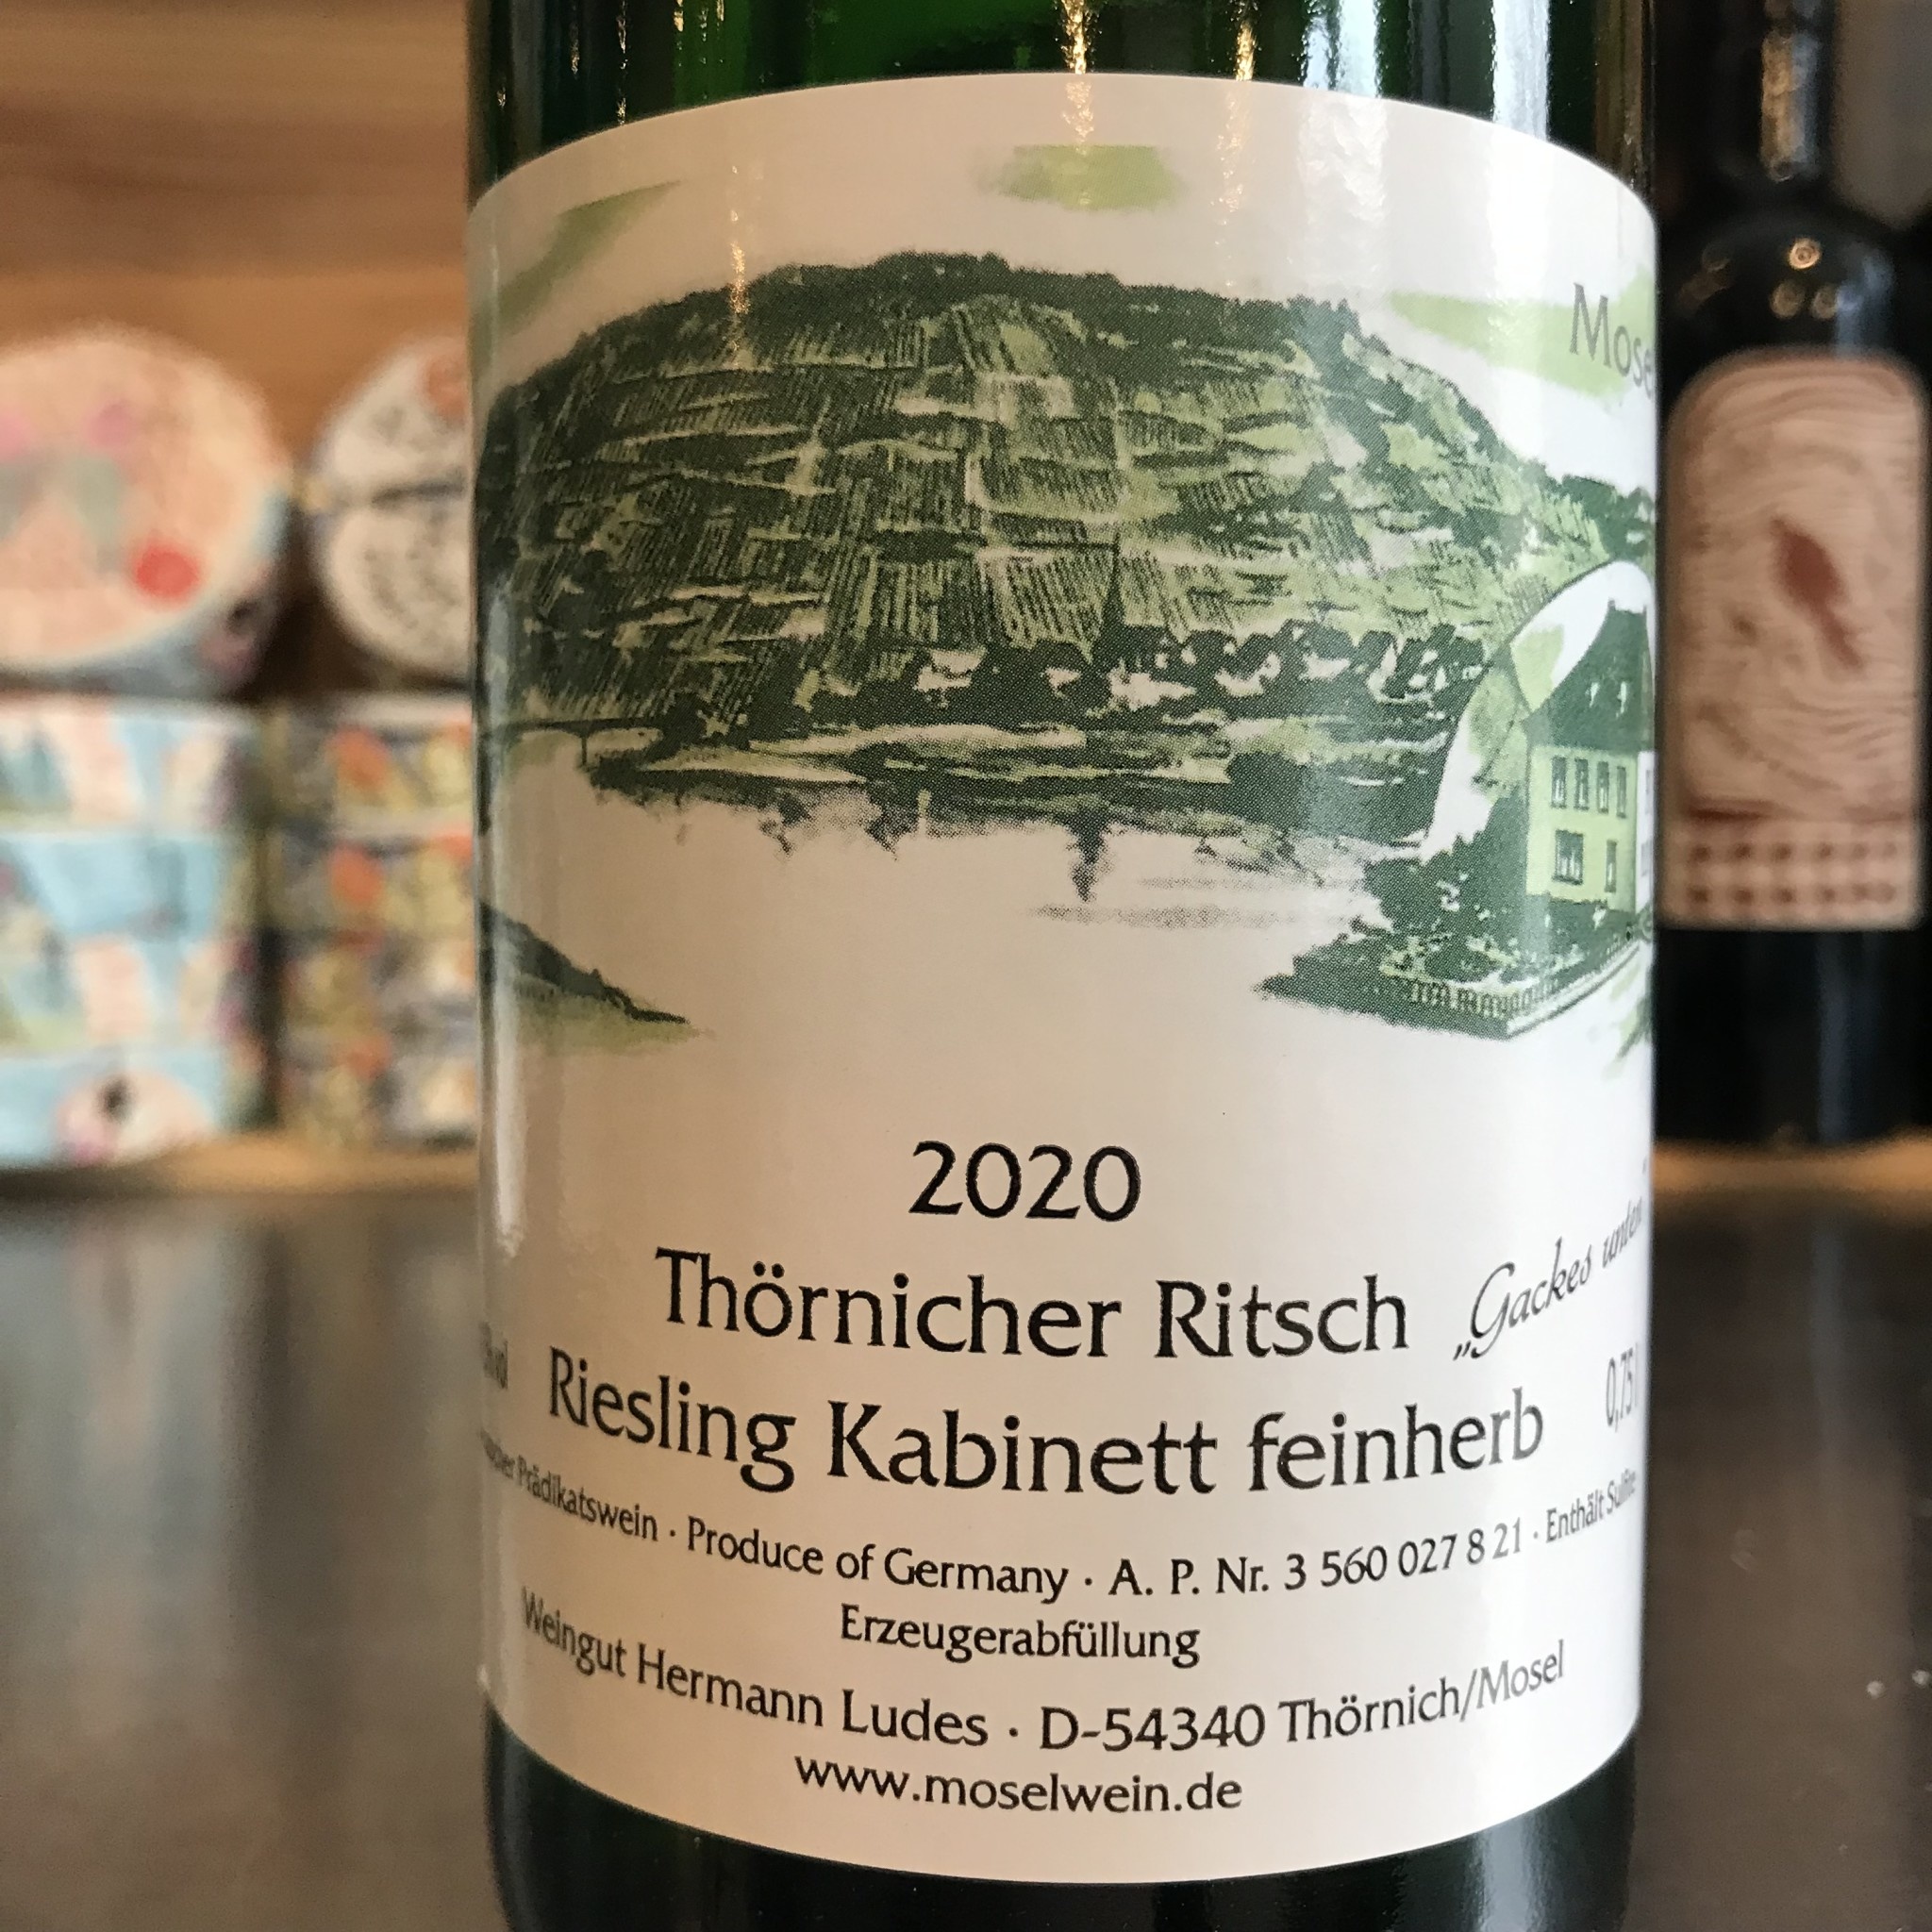 Germany 2020 Ludes Thornicher Ritsch Riesling Kabinett feinherb "Gackes Unten"